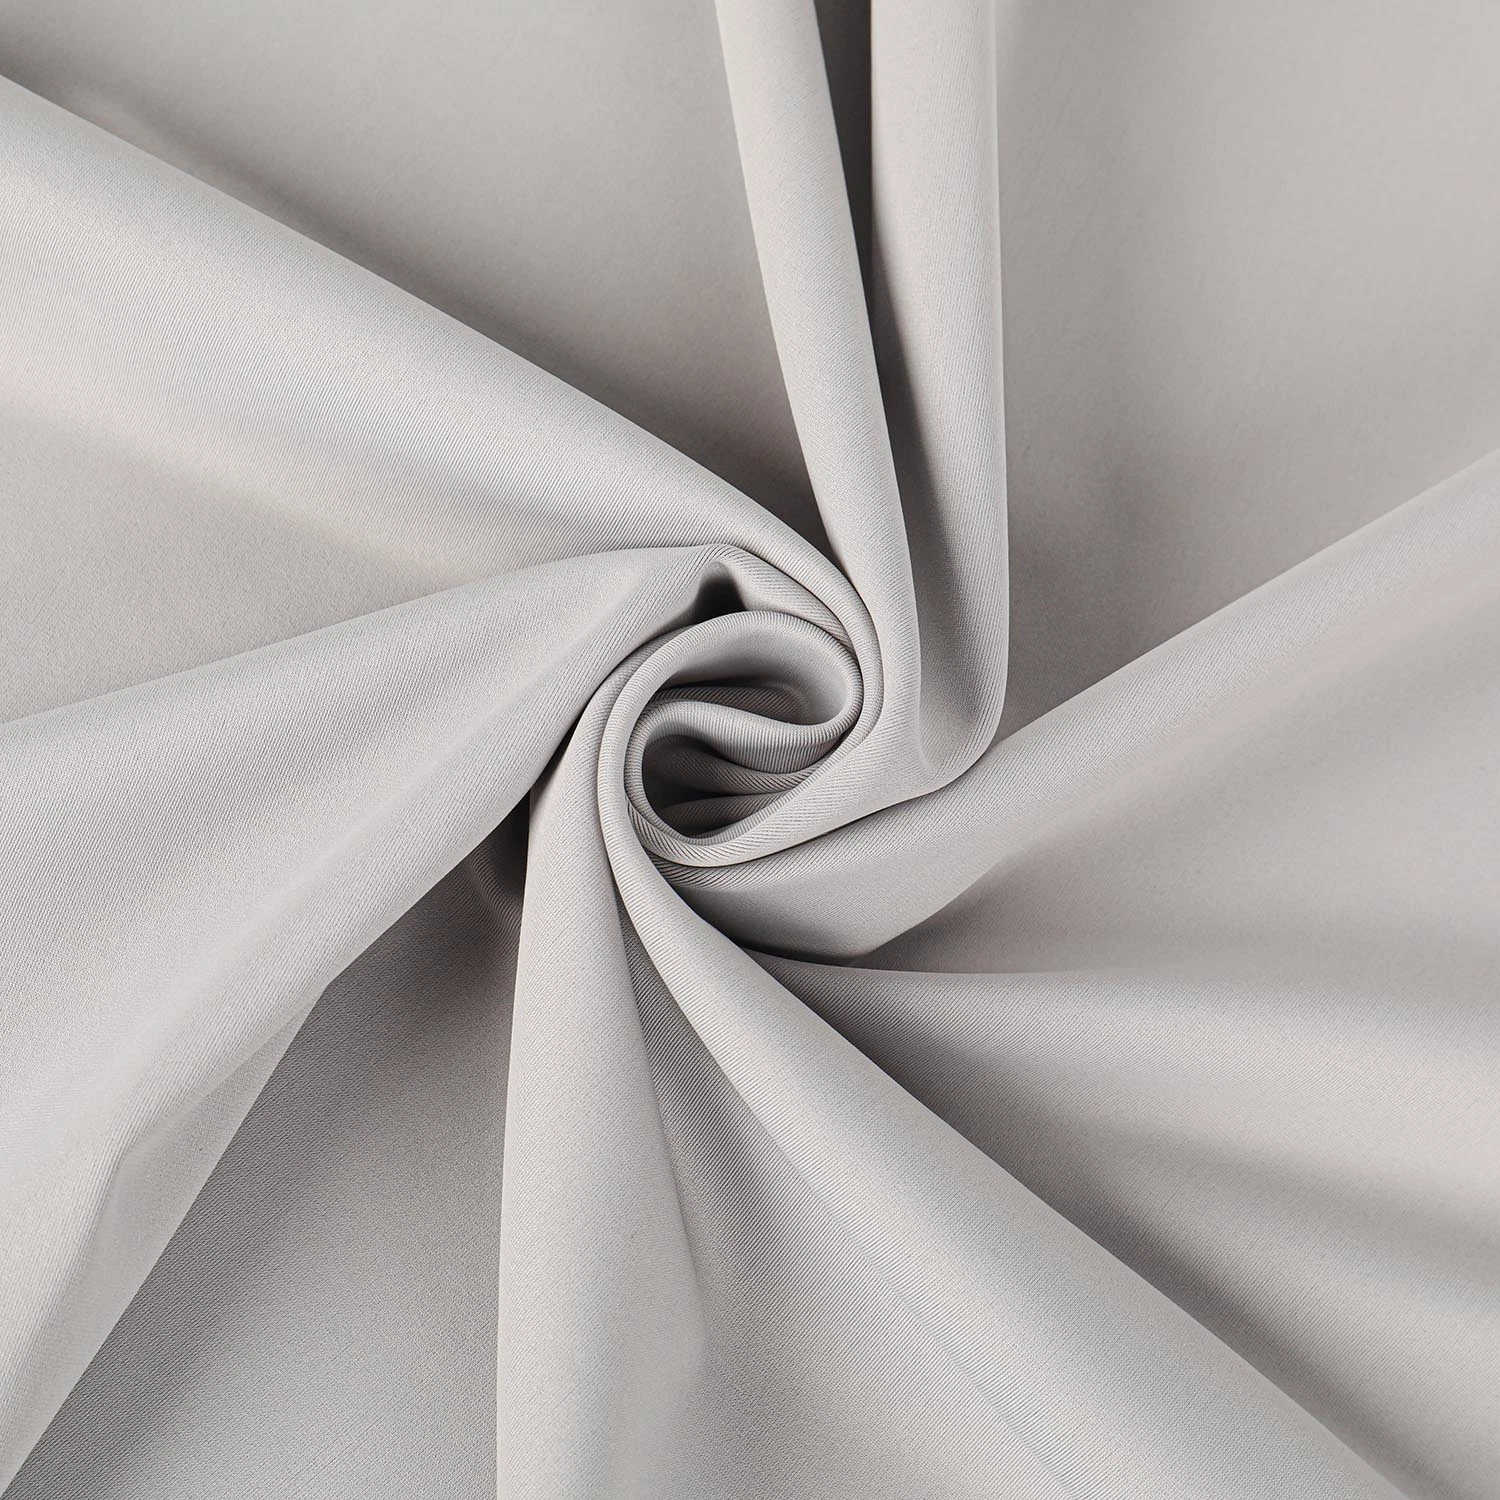 Shaoxing Textile 88%Polyester 12%Spandex Fabric 4 Way Stretch Swimwear Fabric